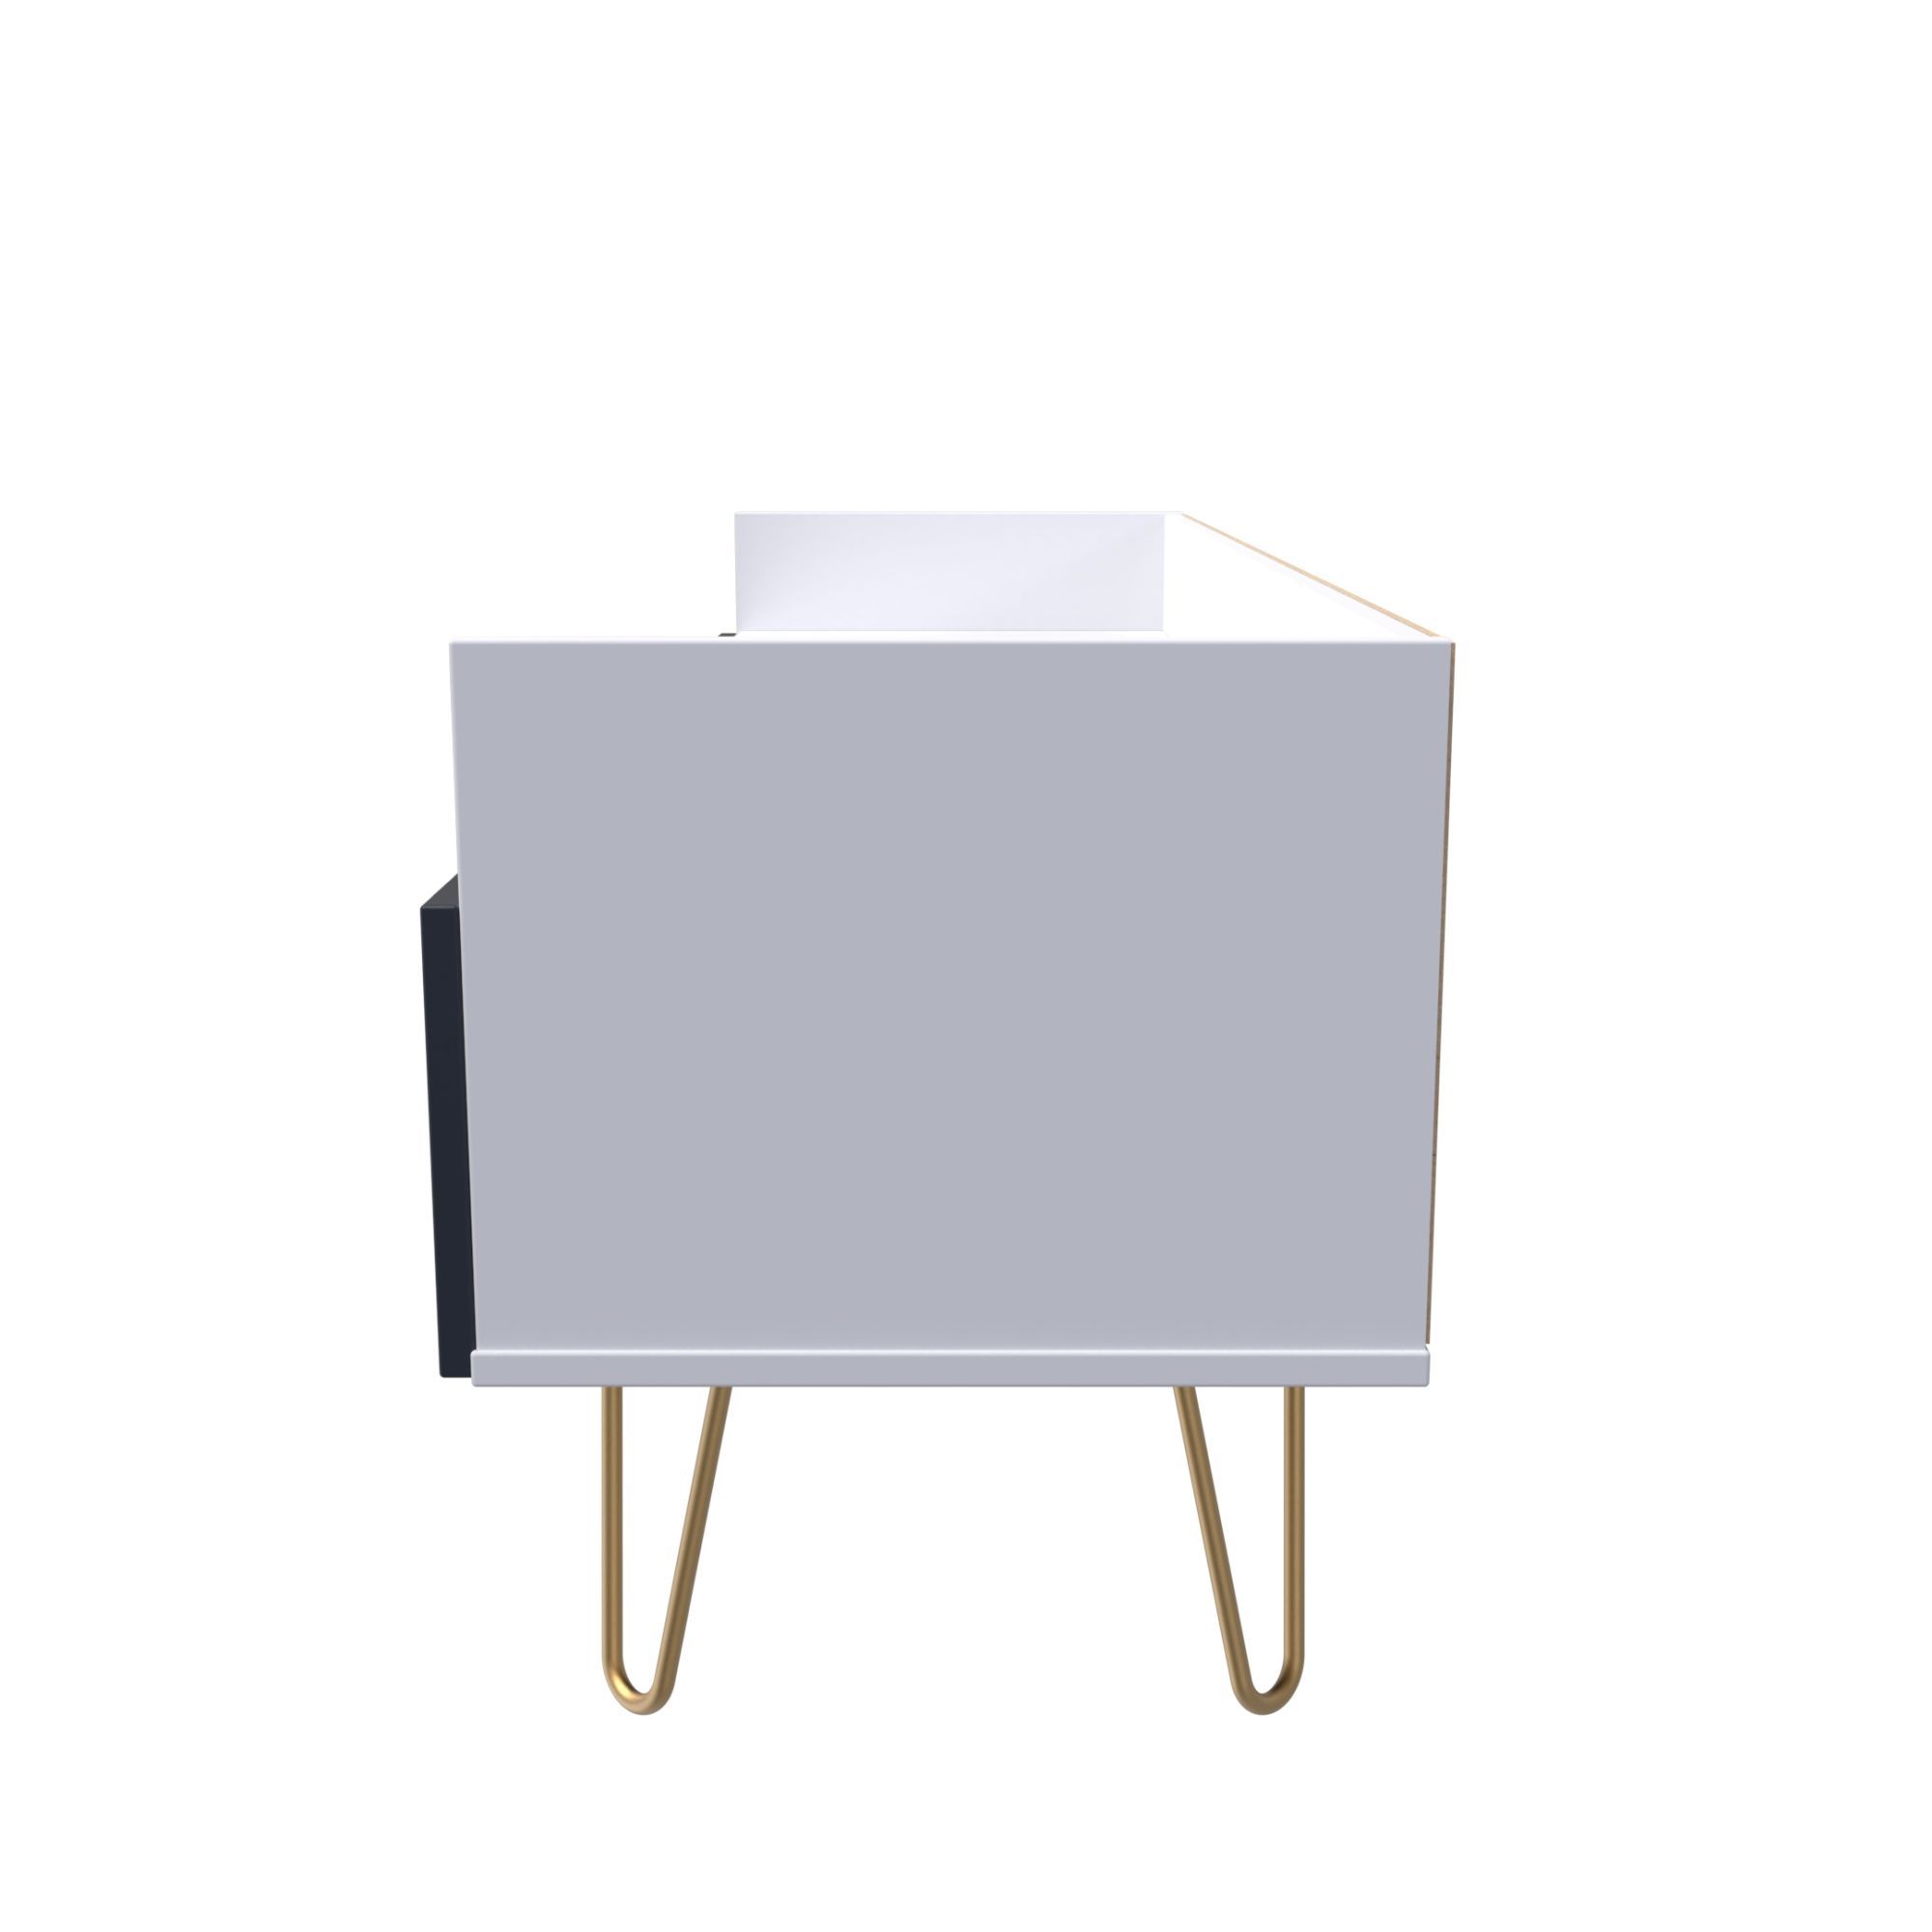 Linear Ready assembled Matt indigo & white Media unit with 2 drawers, (H)128cm x (W)51.5cm x (D)39.5cm